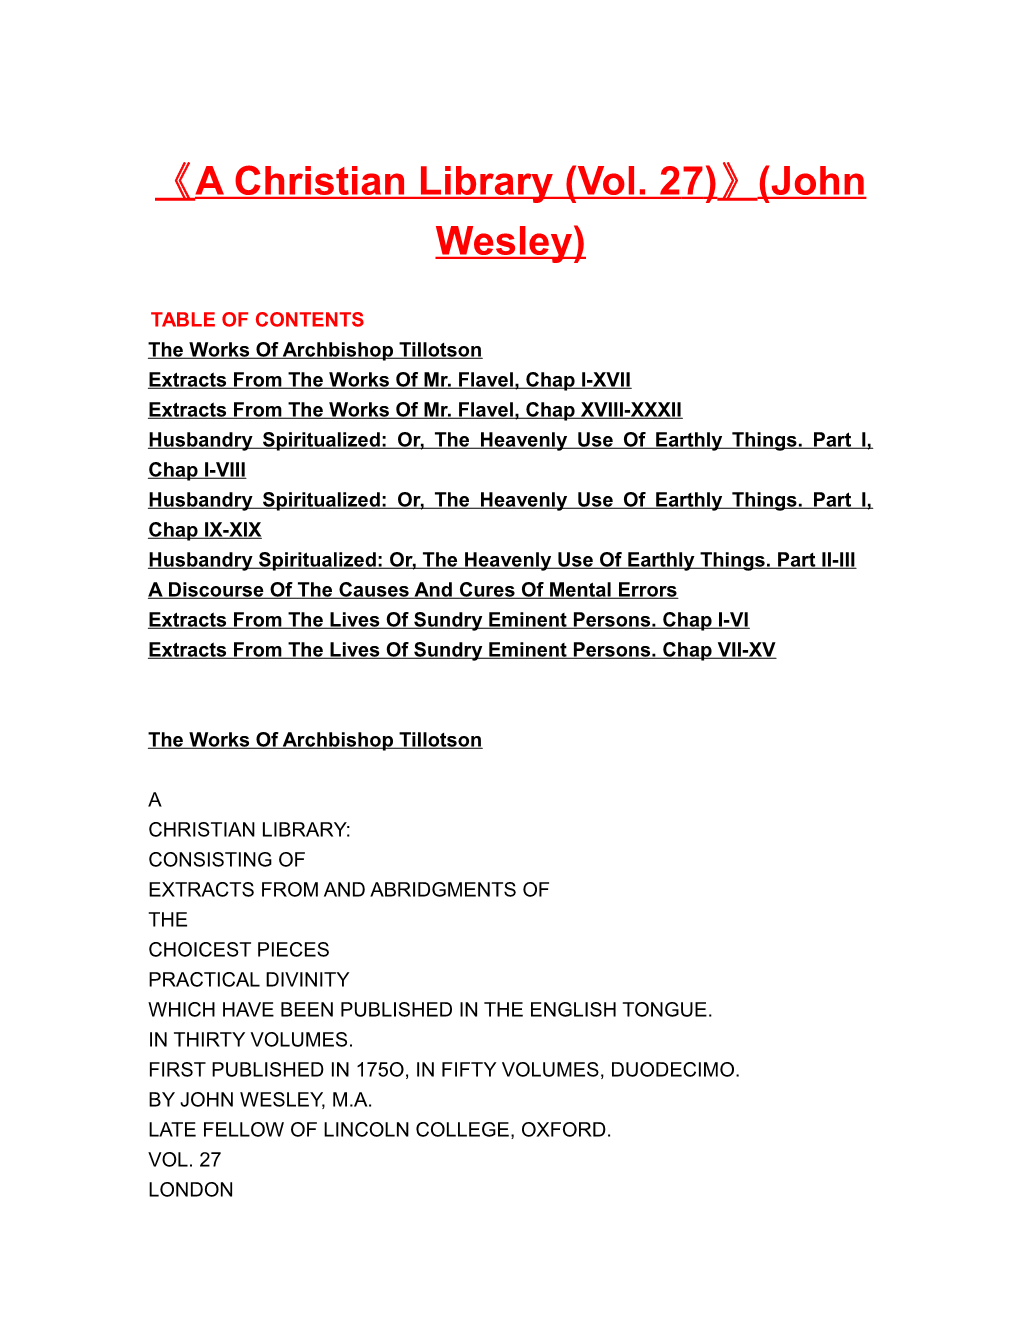 A Christian Library (Vol. 27) (John Wesley)